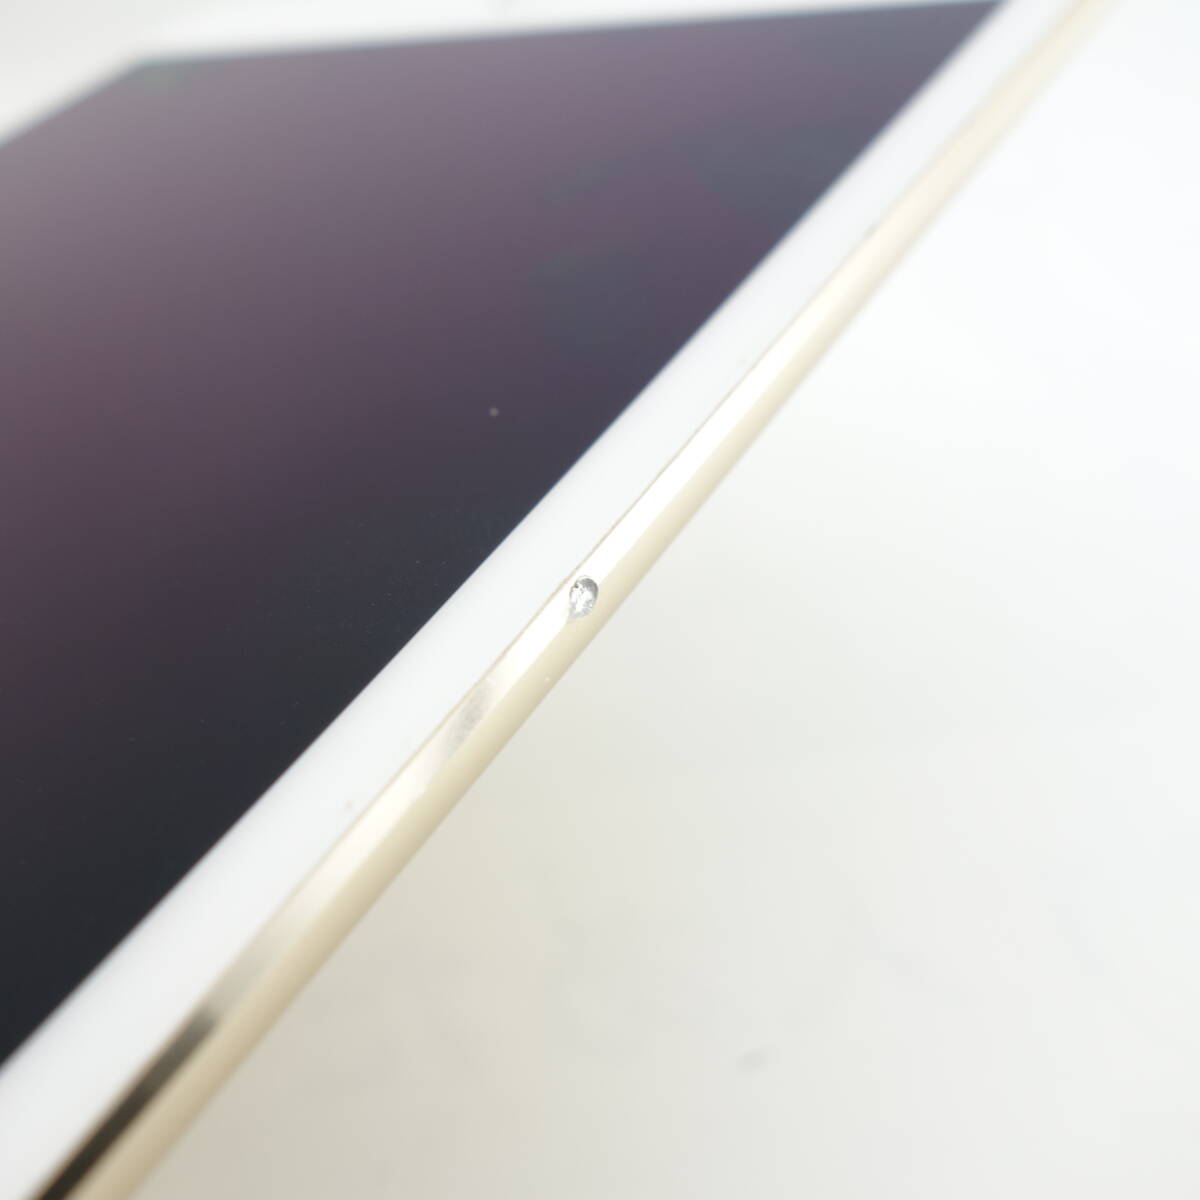 [ Junk ]iPad mini4 16GB Gold багажник неизвестен Cellular модель Acty беж .n блокировка источник питания NG снятие деталей для 